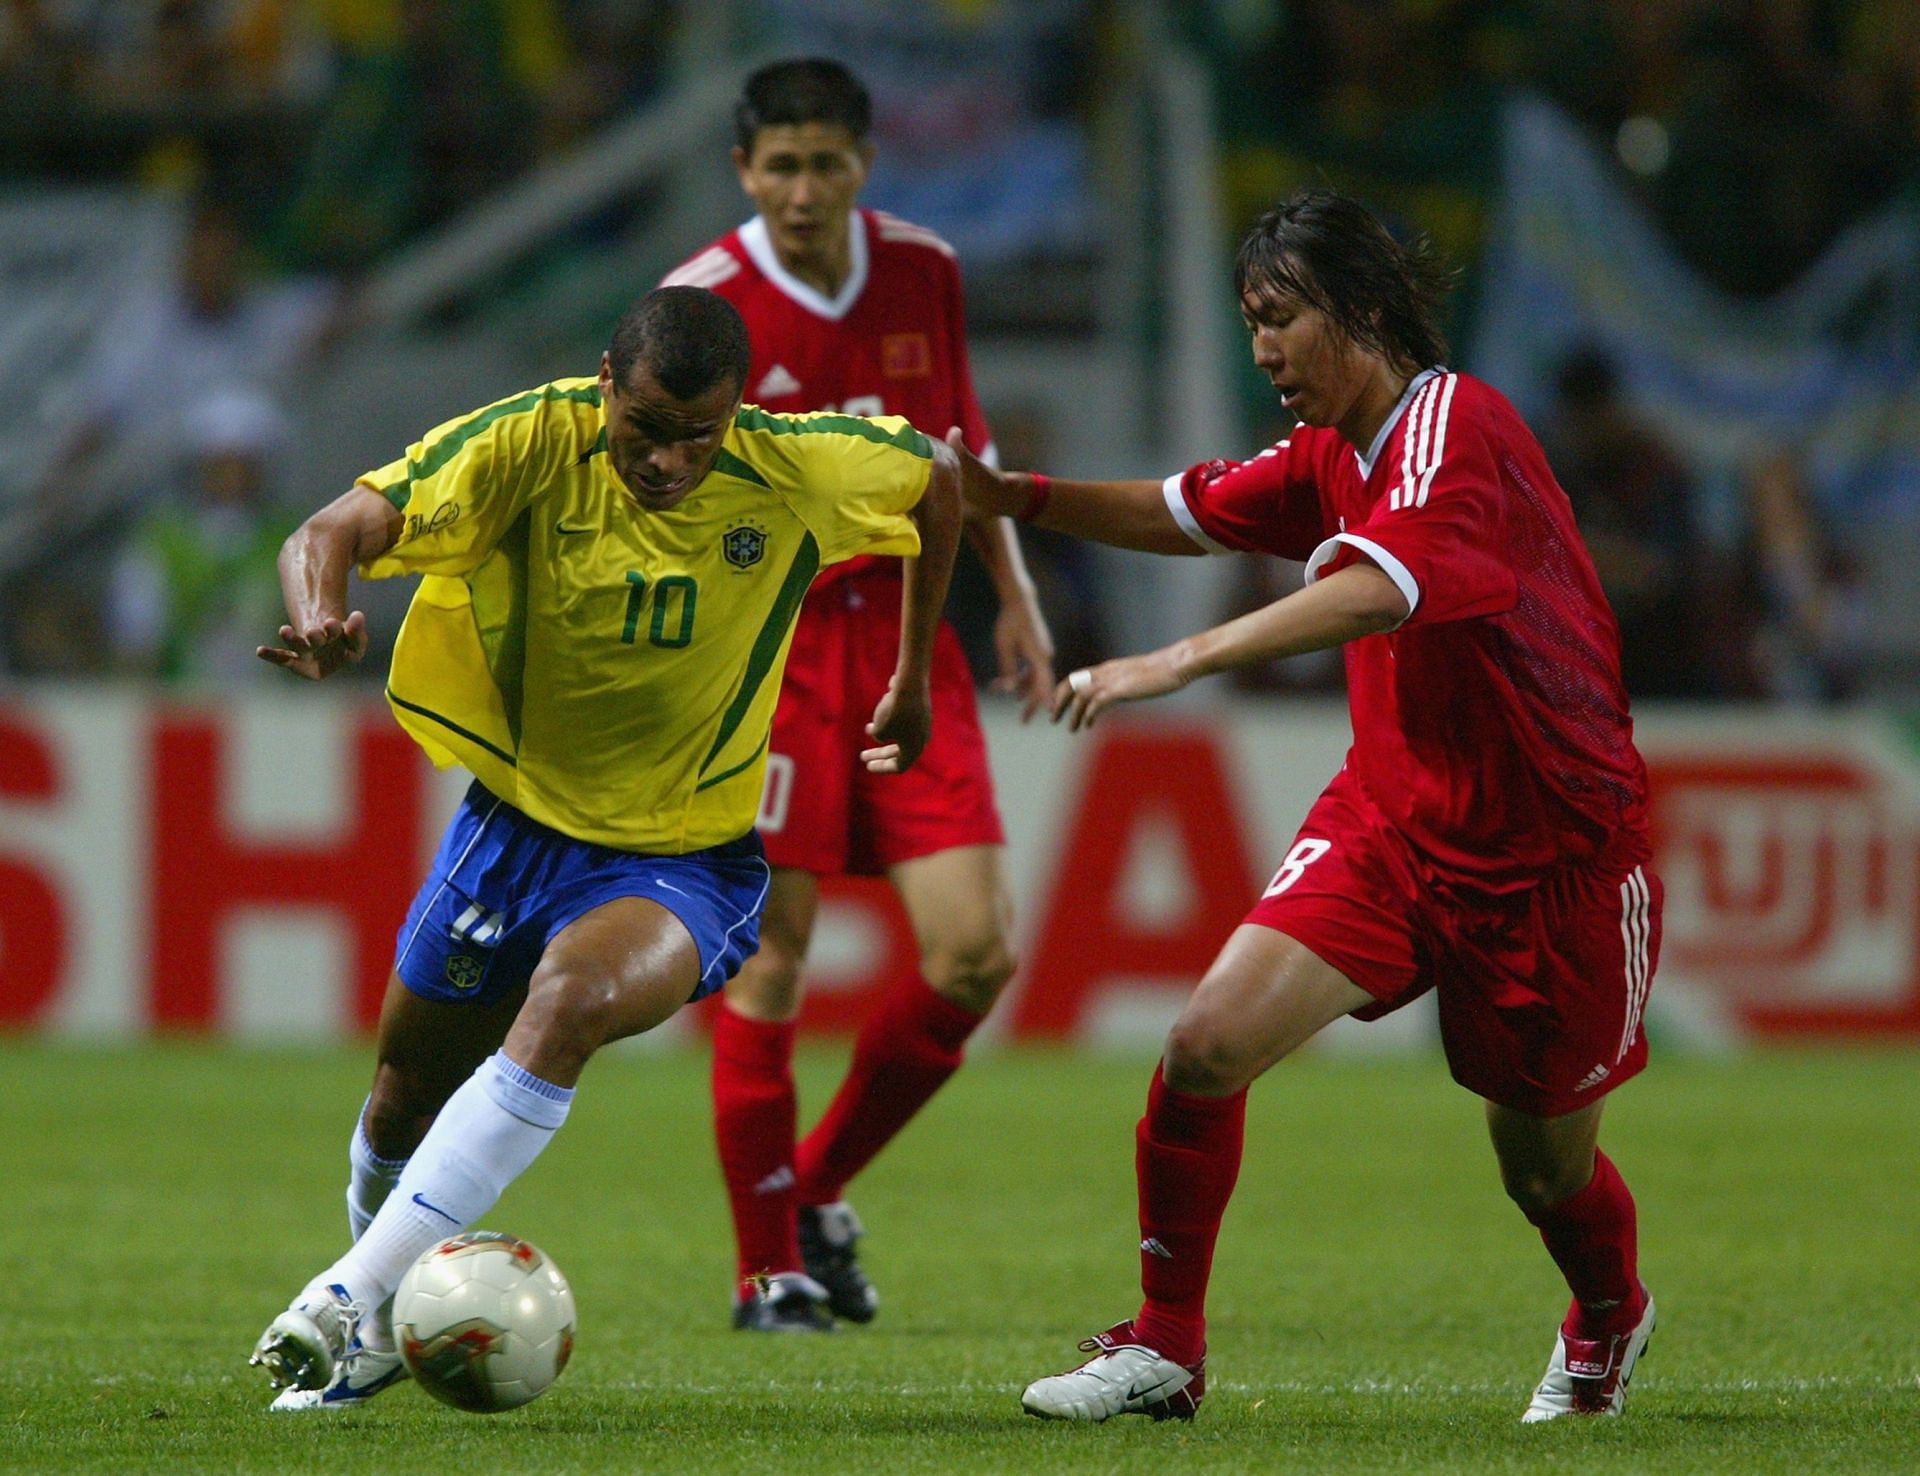 Rivaldo of Brazil and Tie Li of China